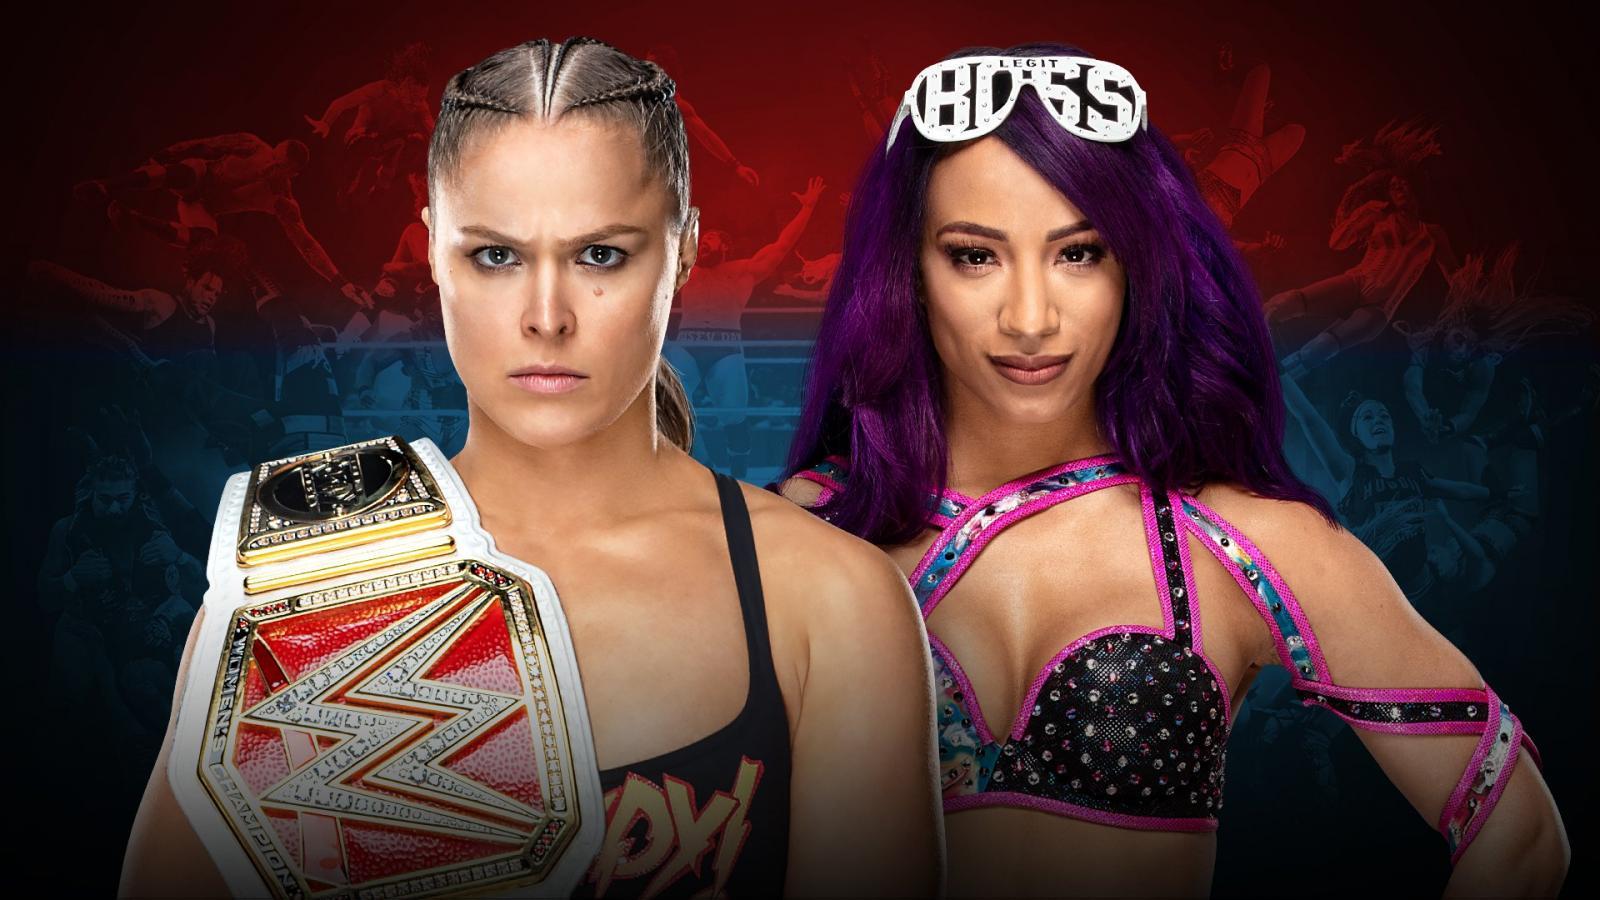 Wwe Royal Rumble 2019 Ronda Rousey Vs Sasha Banks